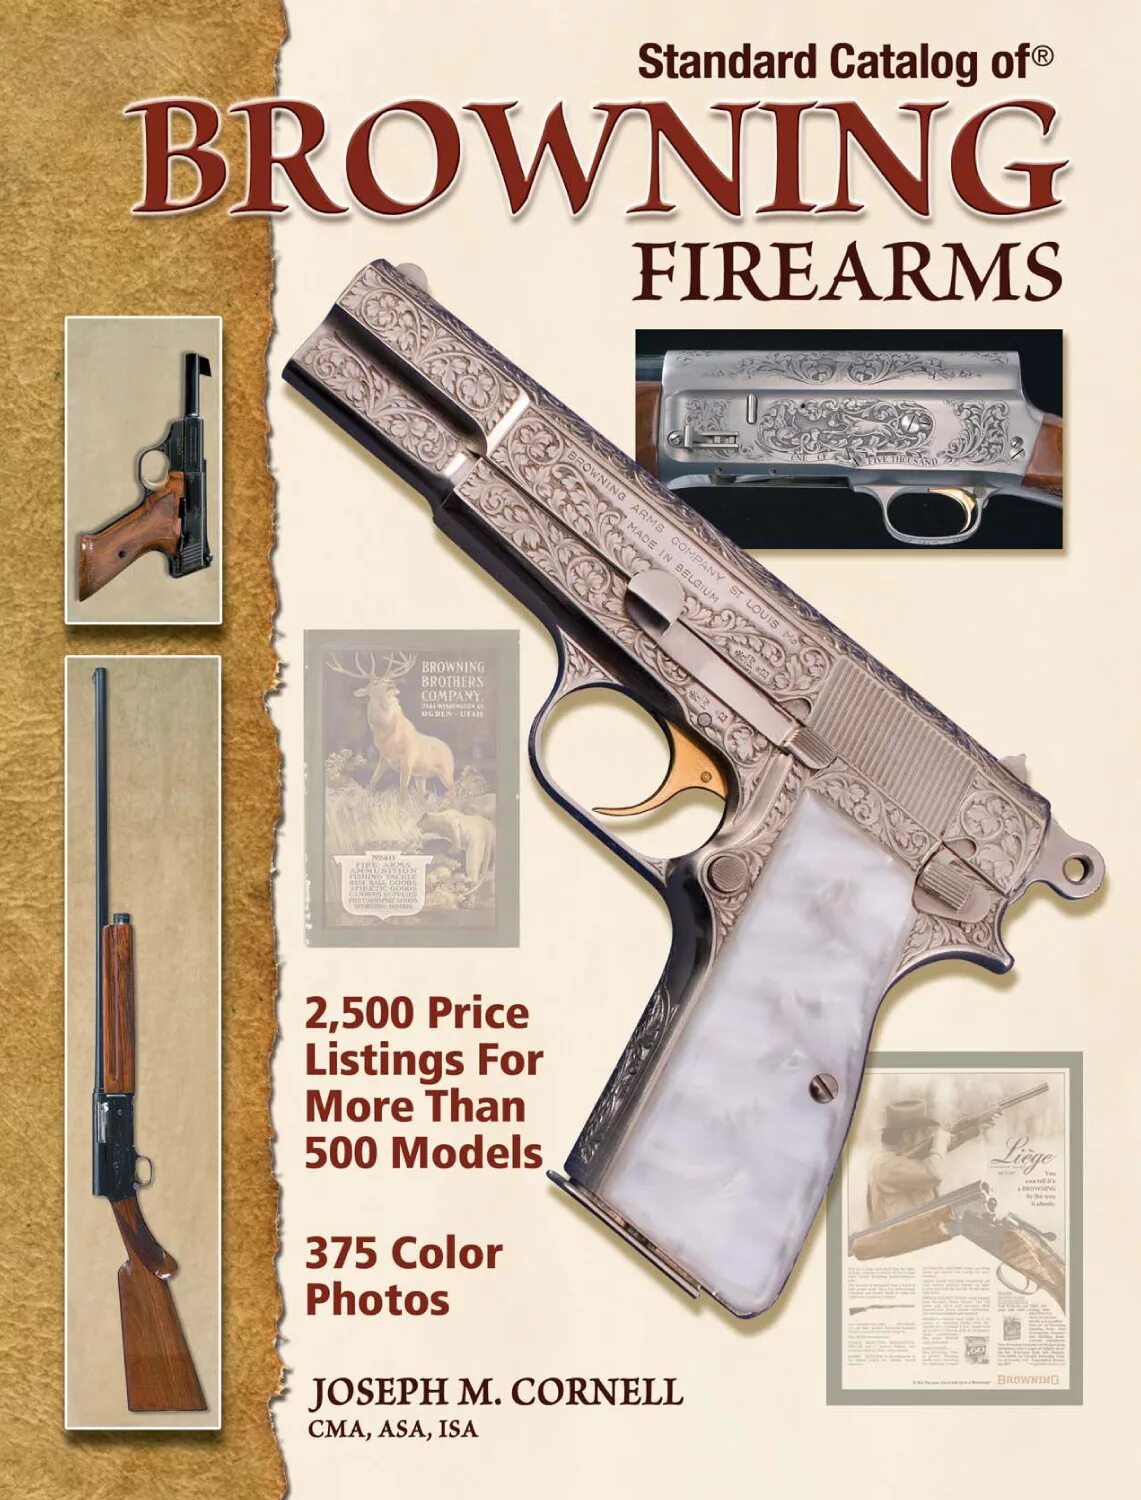 Каталог брауна. Джон Браунинг изобретатель оружия. Джон Мозес Браунинг оружие. Браунинг стандарт. Книга по оружию самообороны.